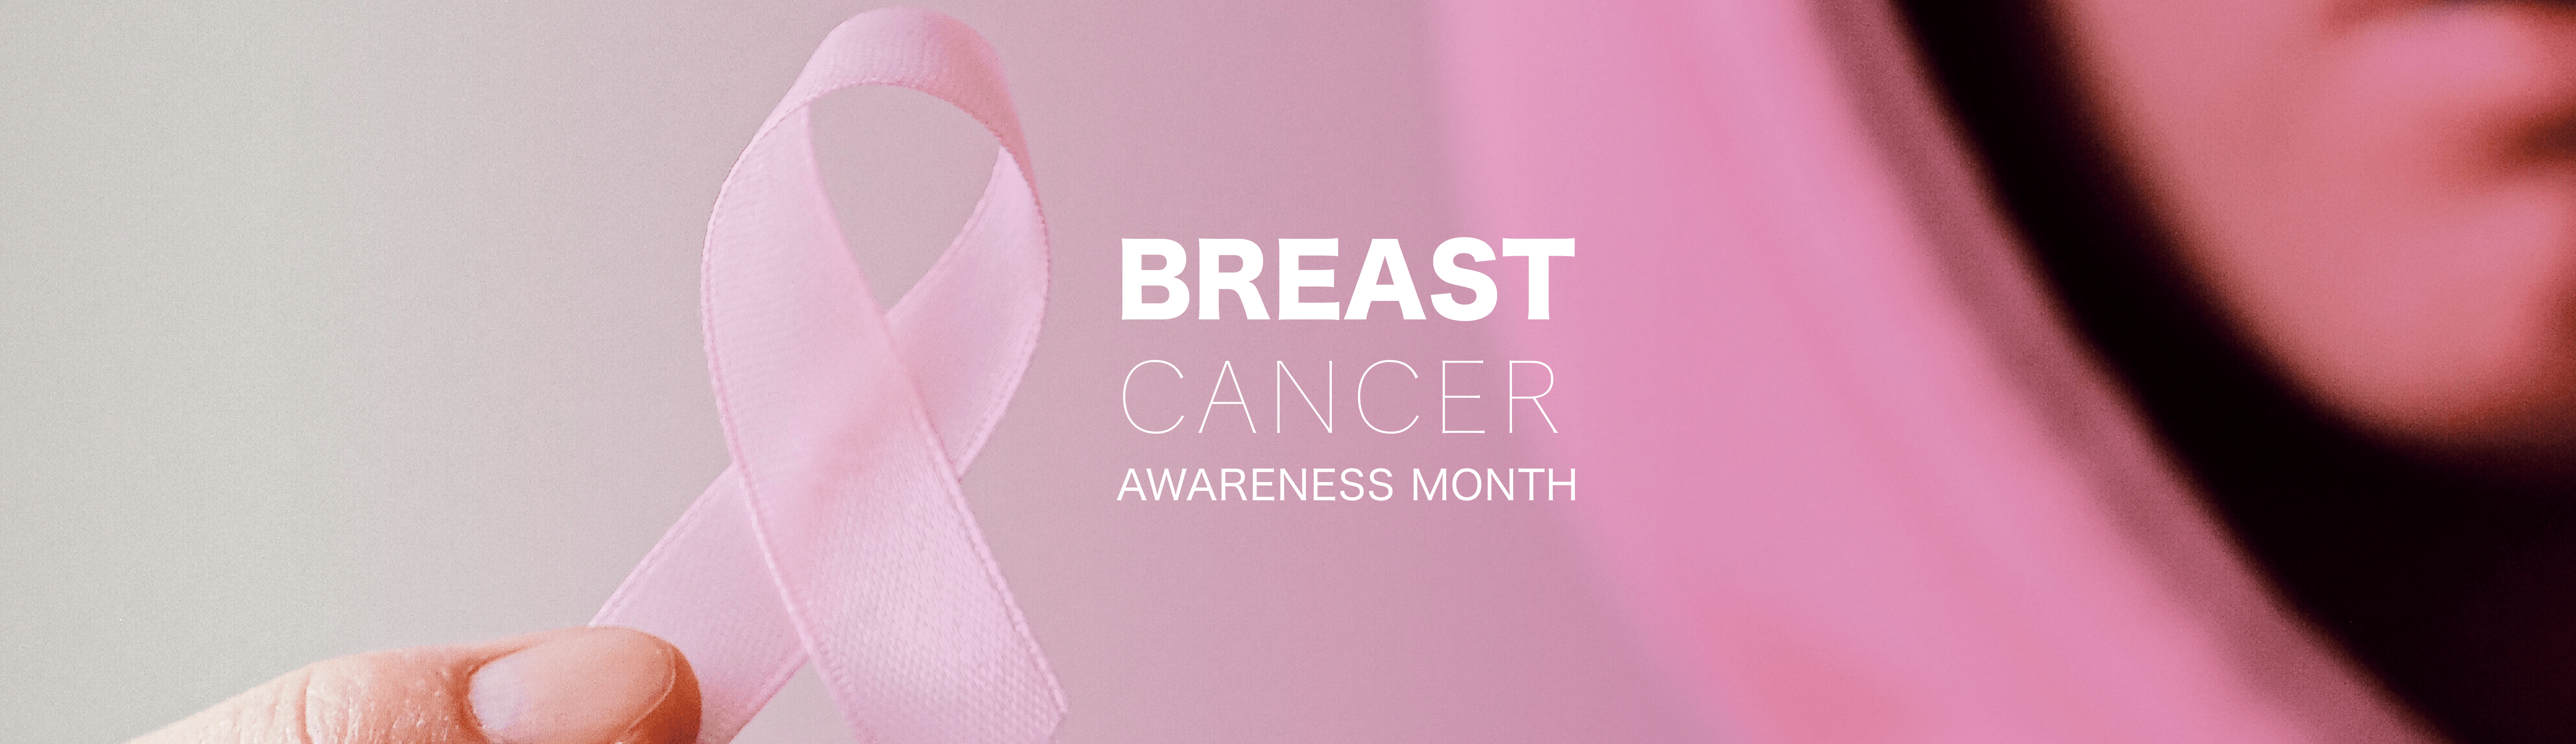 Breast Cancer Awareness, Breast Cancer Prevention, Breast Cancer Prevention Media Kit, Breast Cancer Medicare